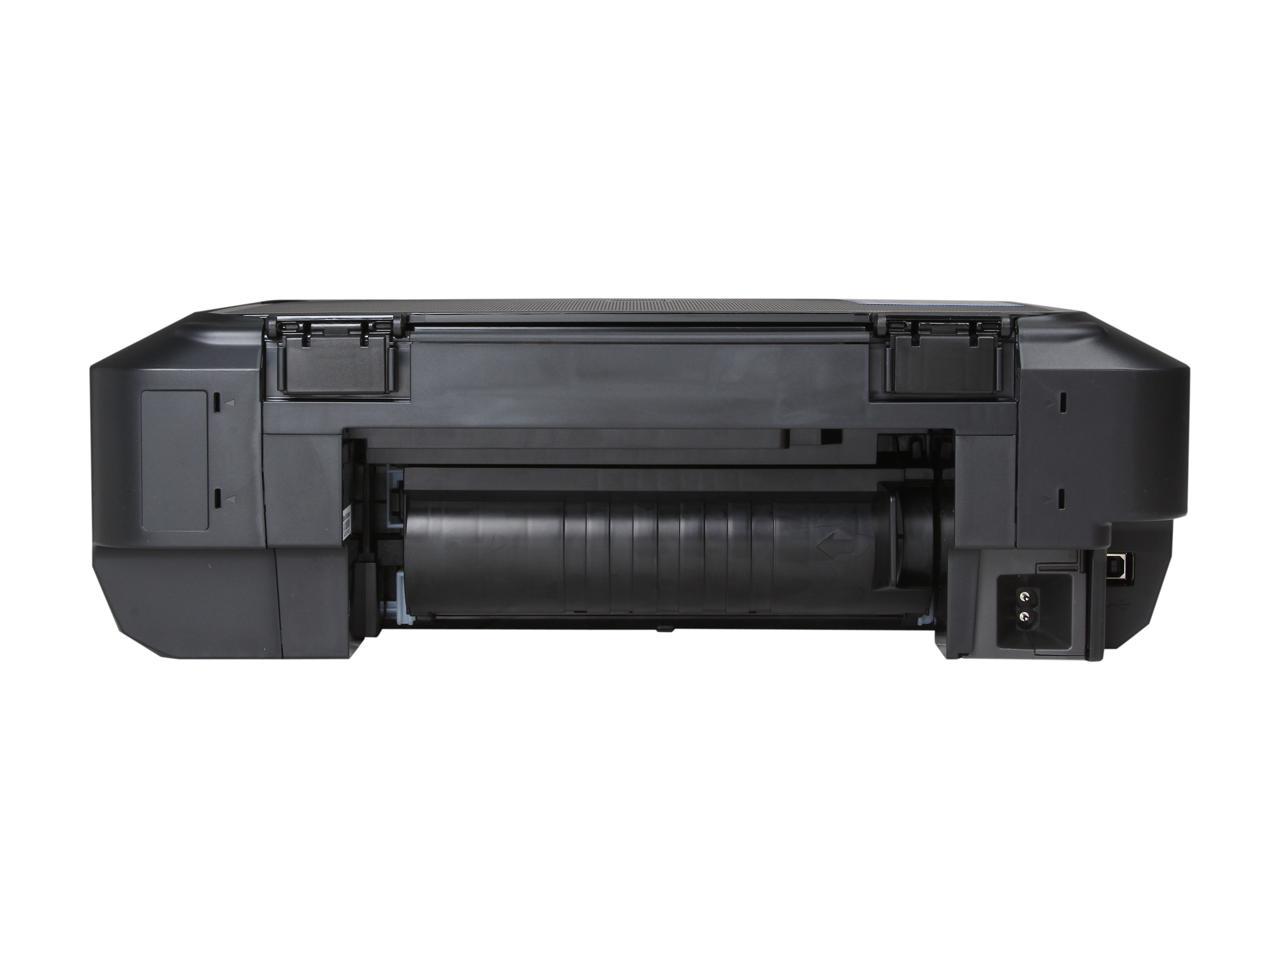 Canon Pixma Mg6420 Wireless Inkjet Photo All In One Printer Black 4474